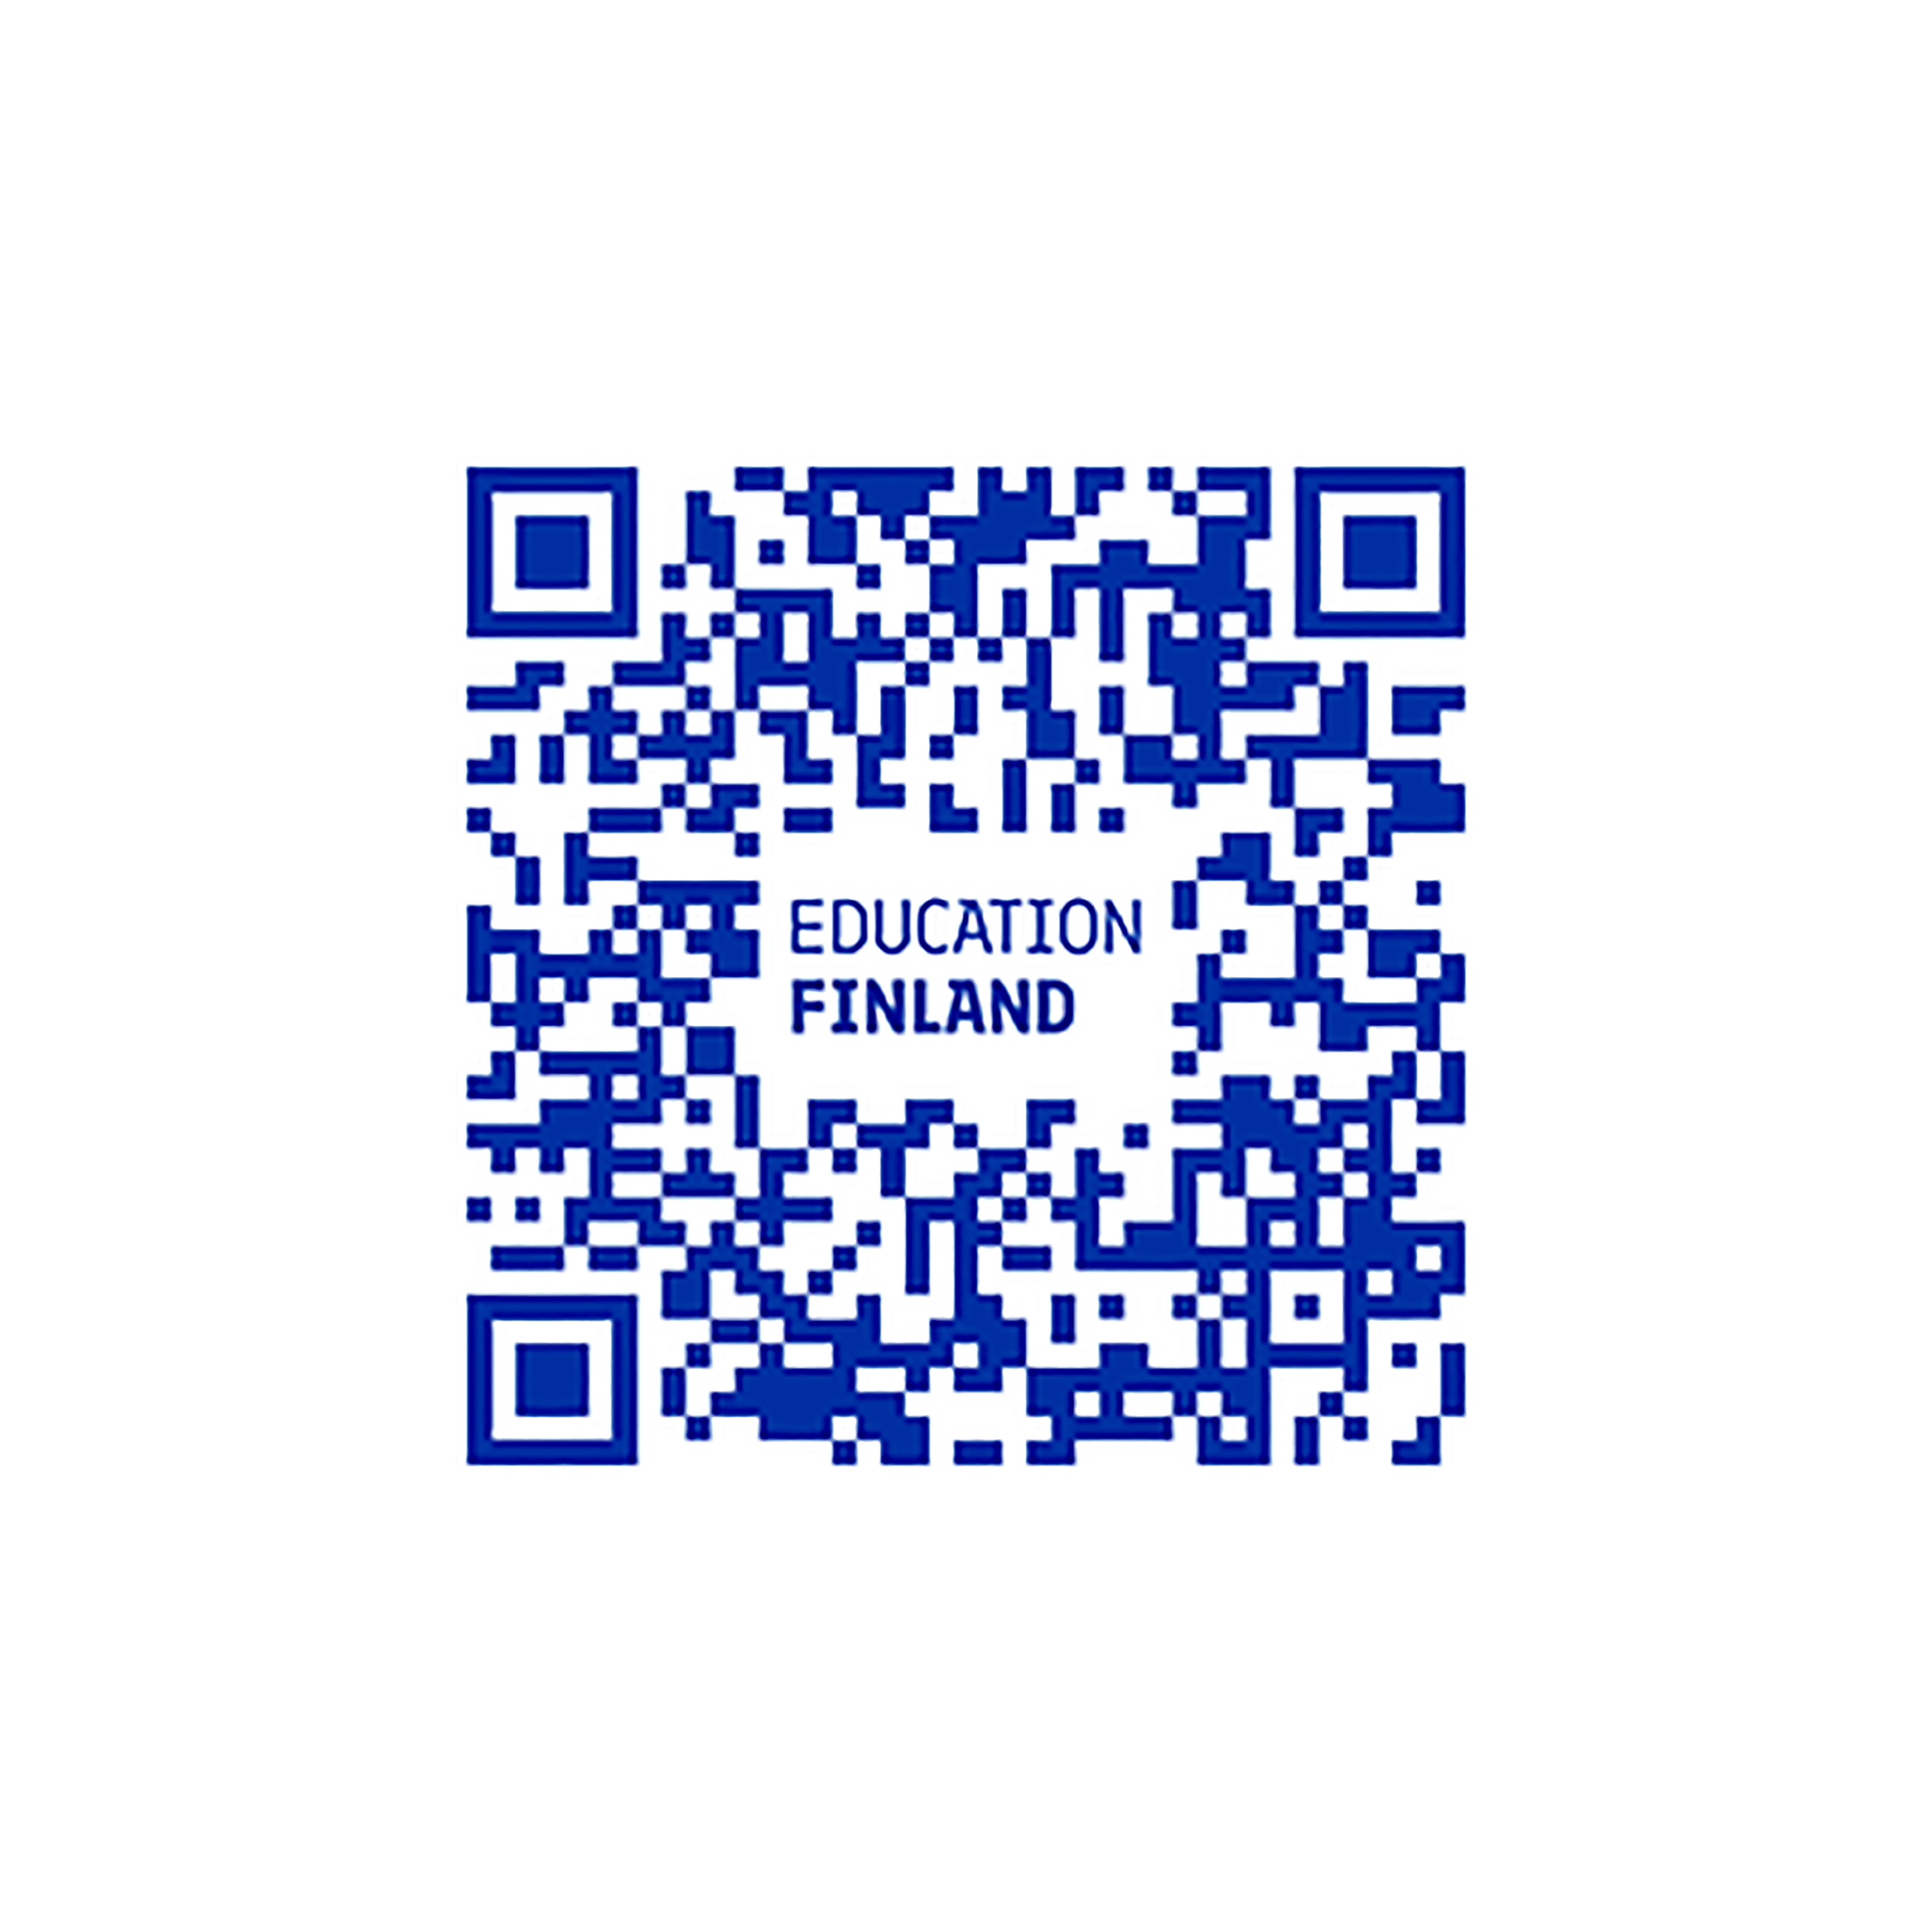 QR code to website https://webar.arilyn.com/EducationFinland/?ver=Dubai